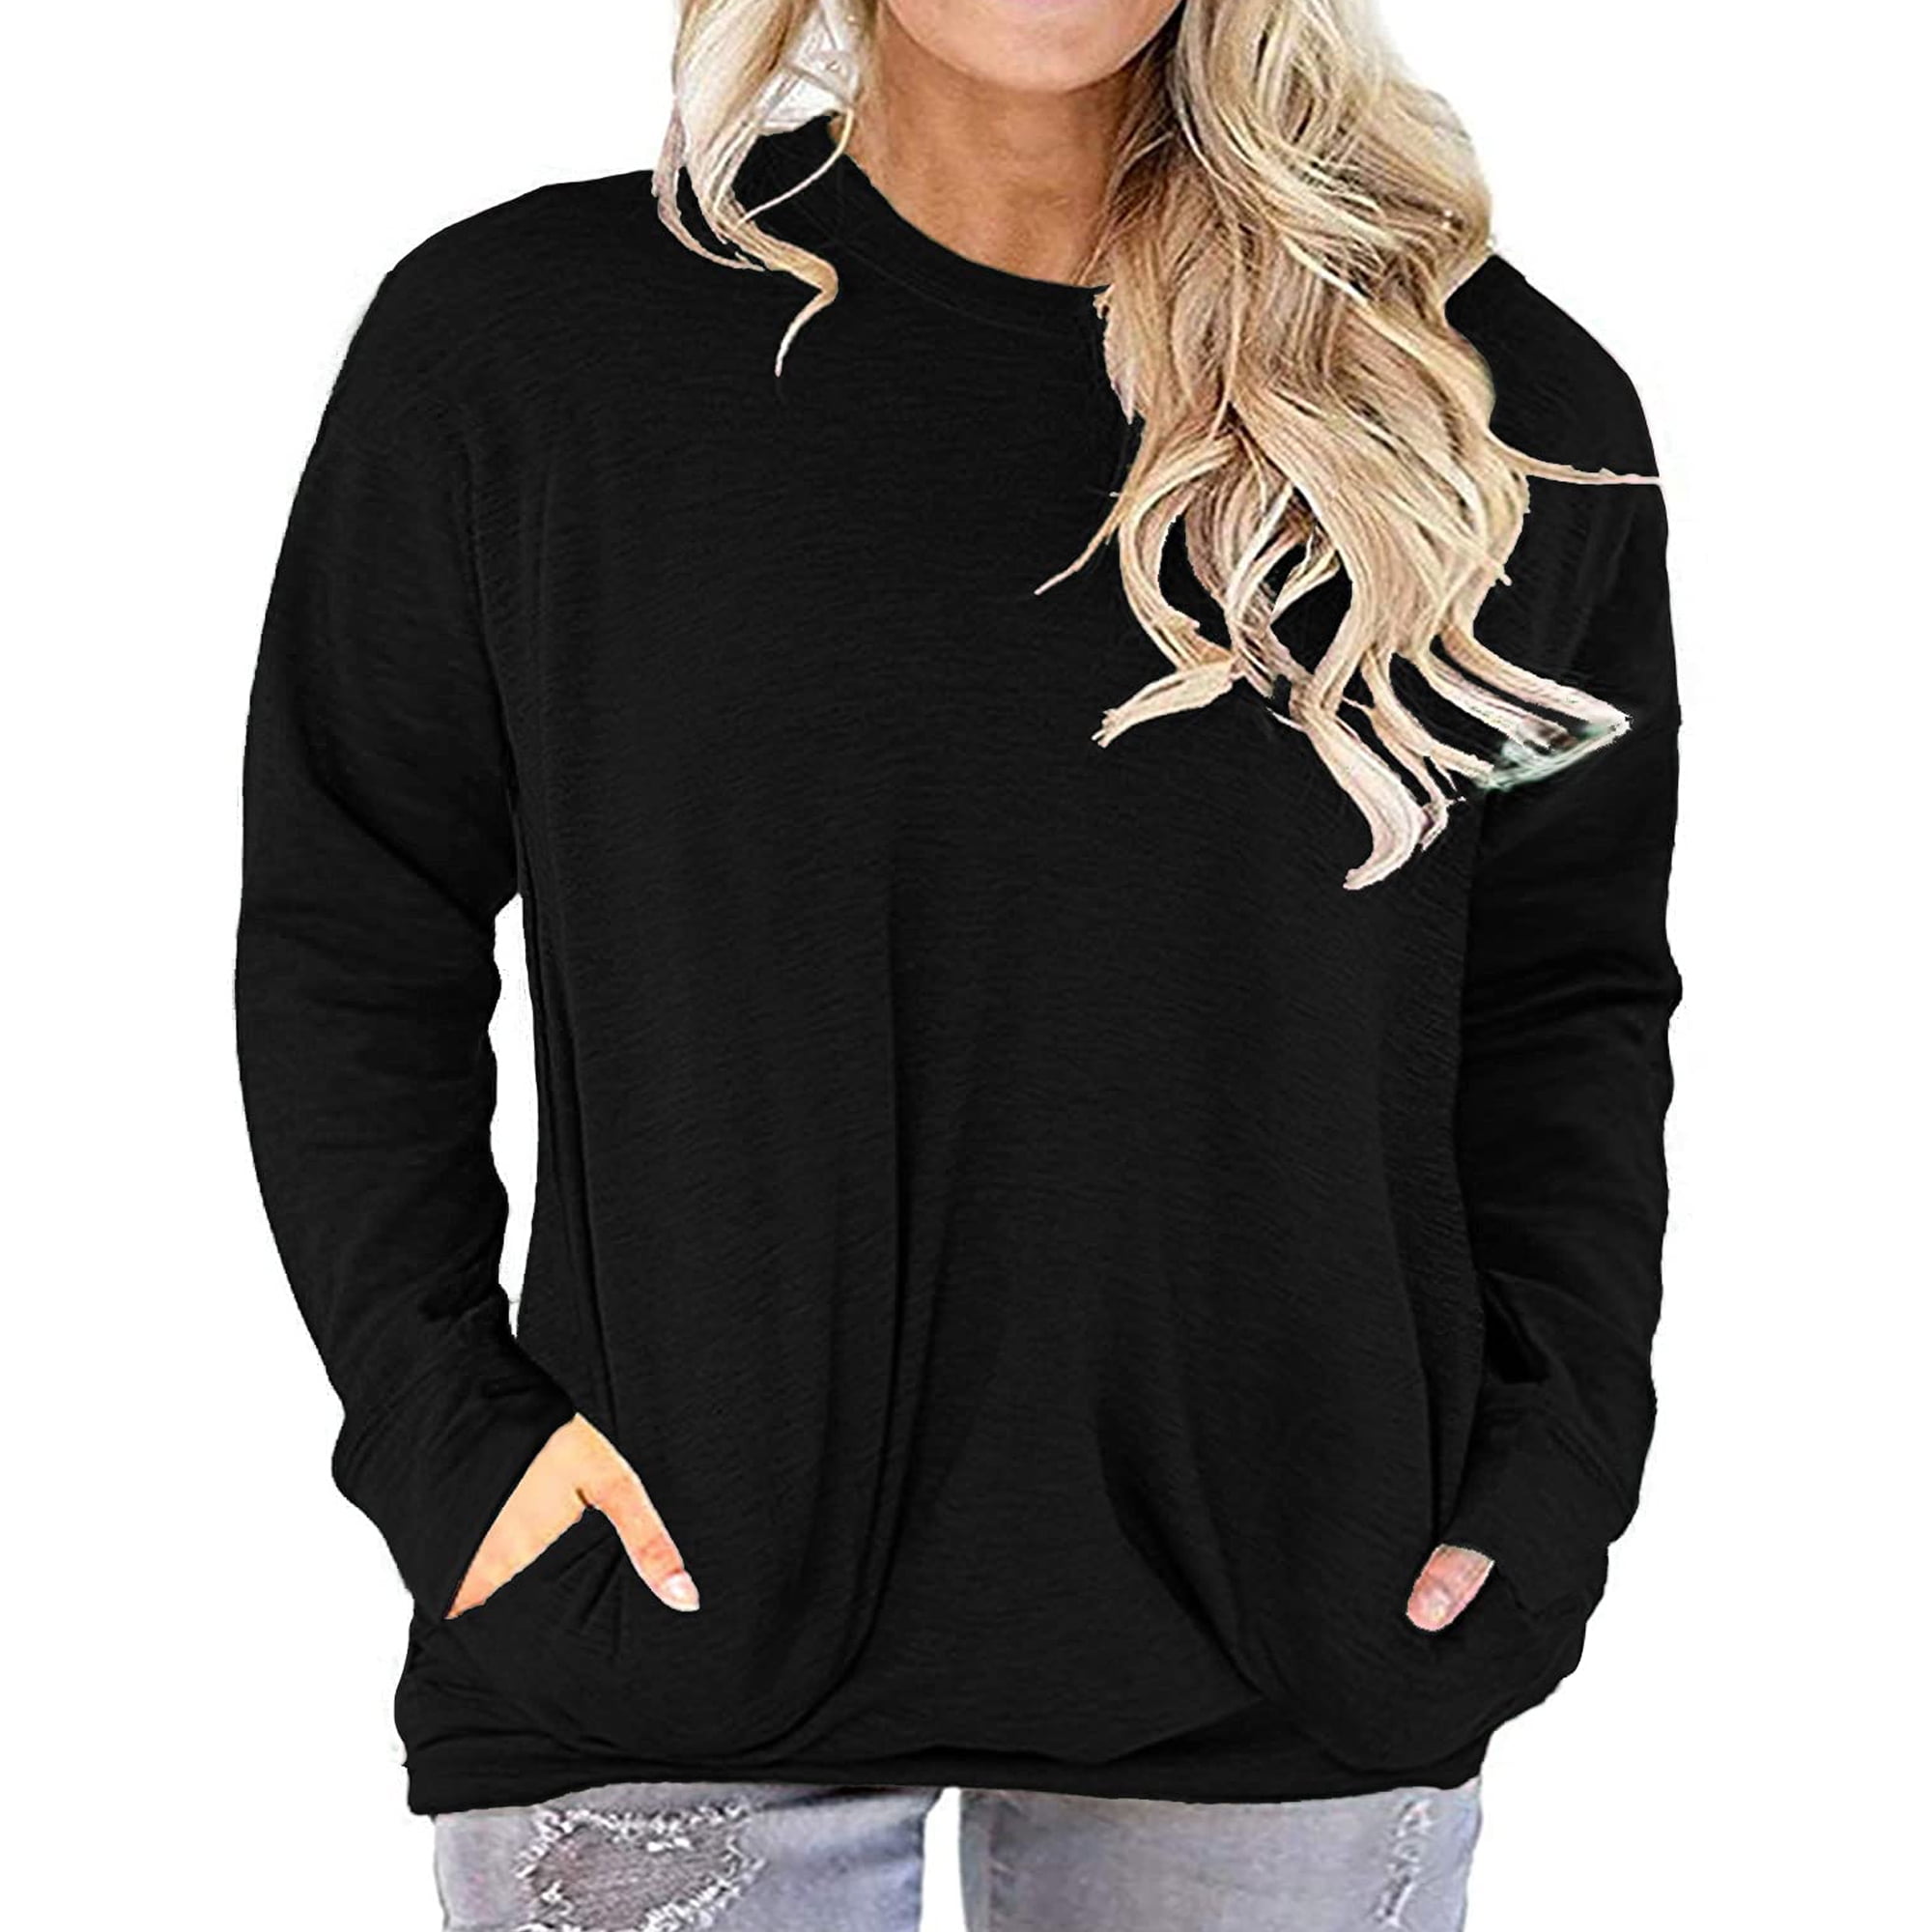 Aniywn Women Round Neck Long Sleeve Star Print Pullover Sweatshirt Spring Autumn Lightweight Tops Blouse 